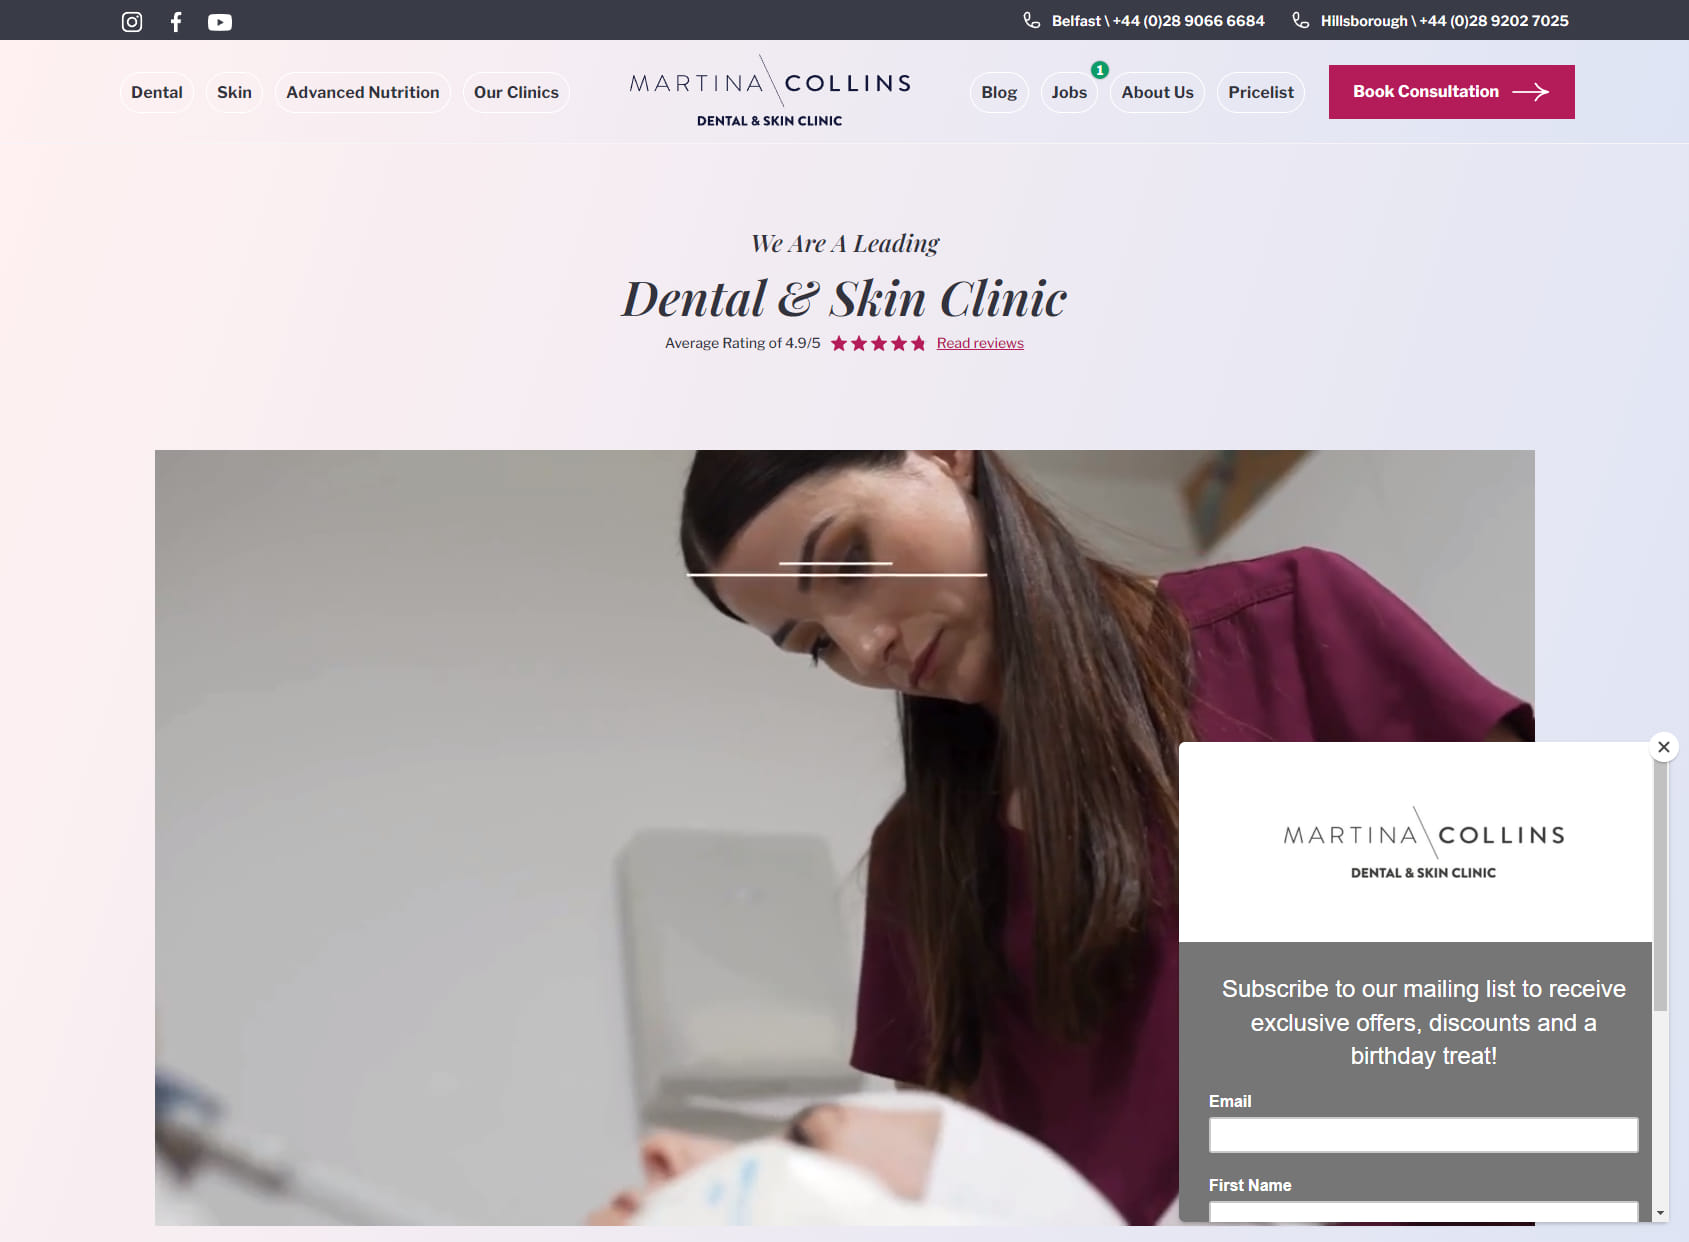 Martina Collins Dental & Skin Clinic - (Private Dentist Belfast | Cosmetic Dentist Belfast | Botox Belfast)